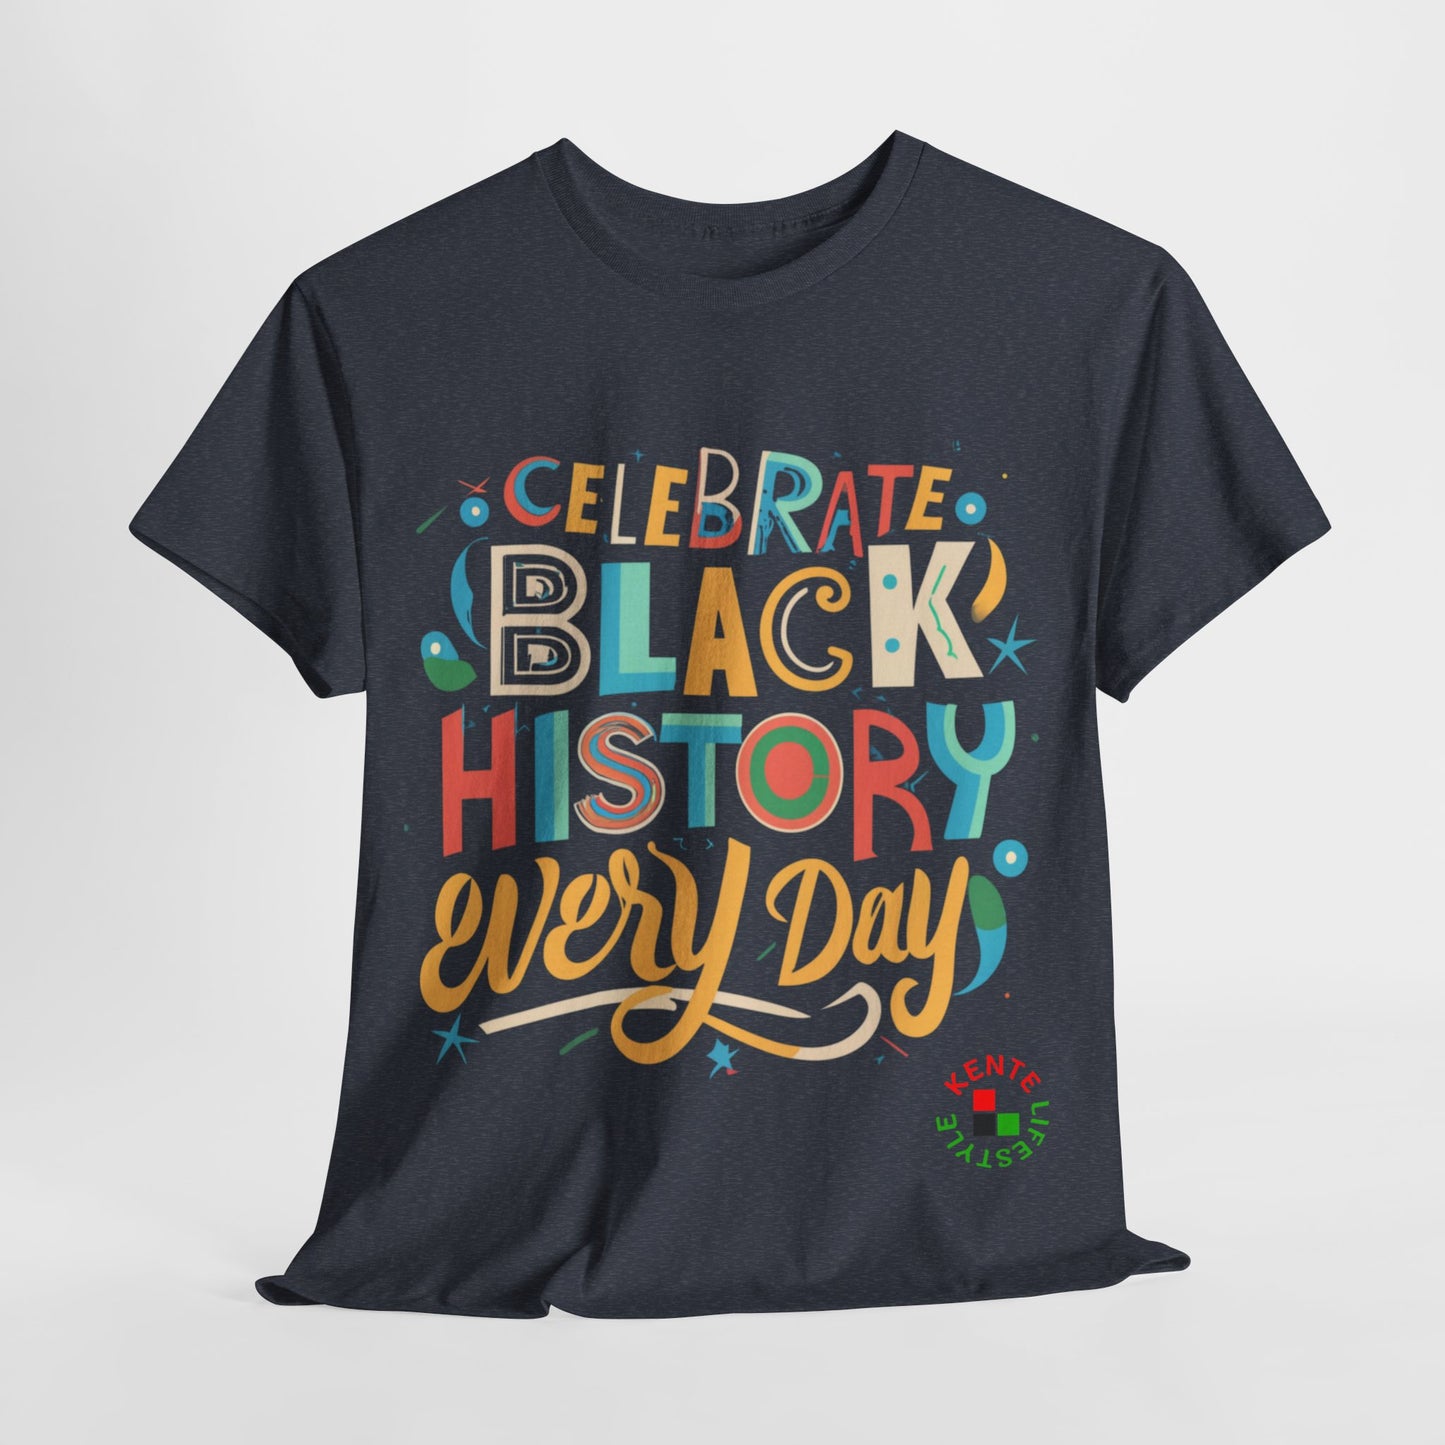 Celebrate Black History Everyday - T-shirt